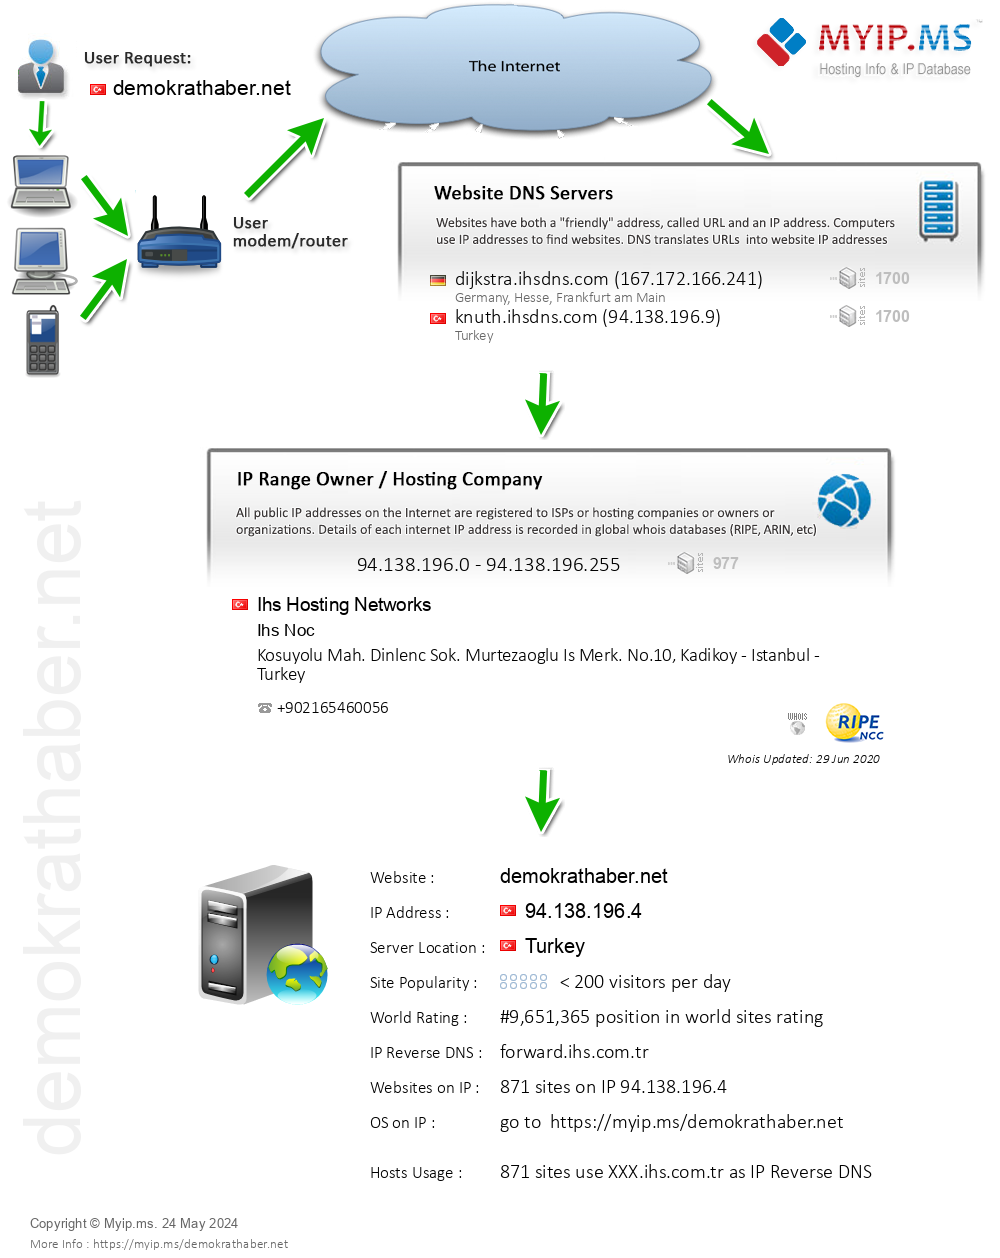 Demokrathaber.net - Website Hosting Visual IP Diagram